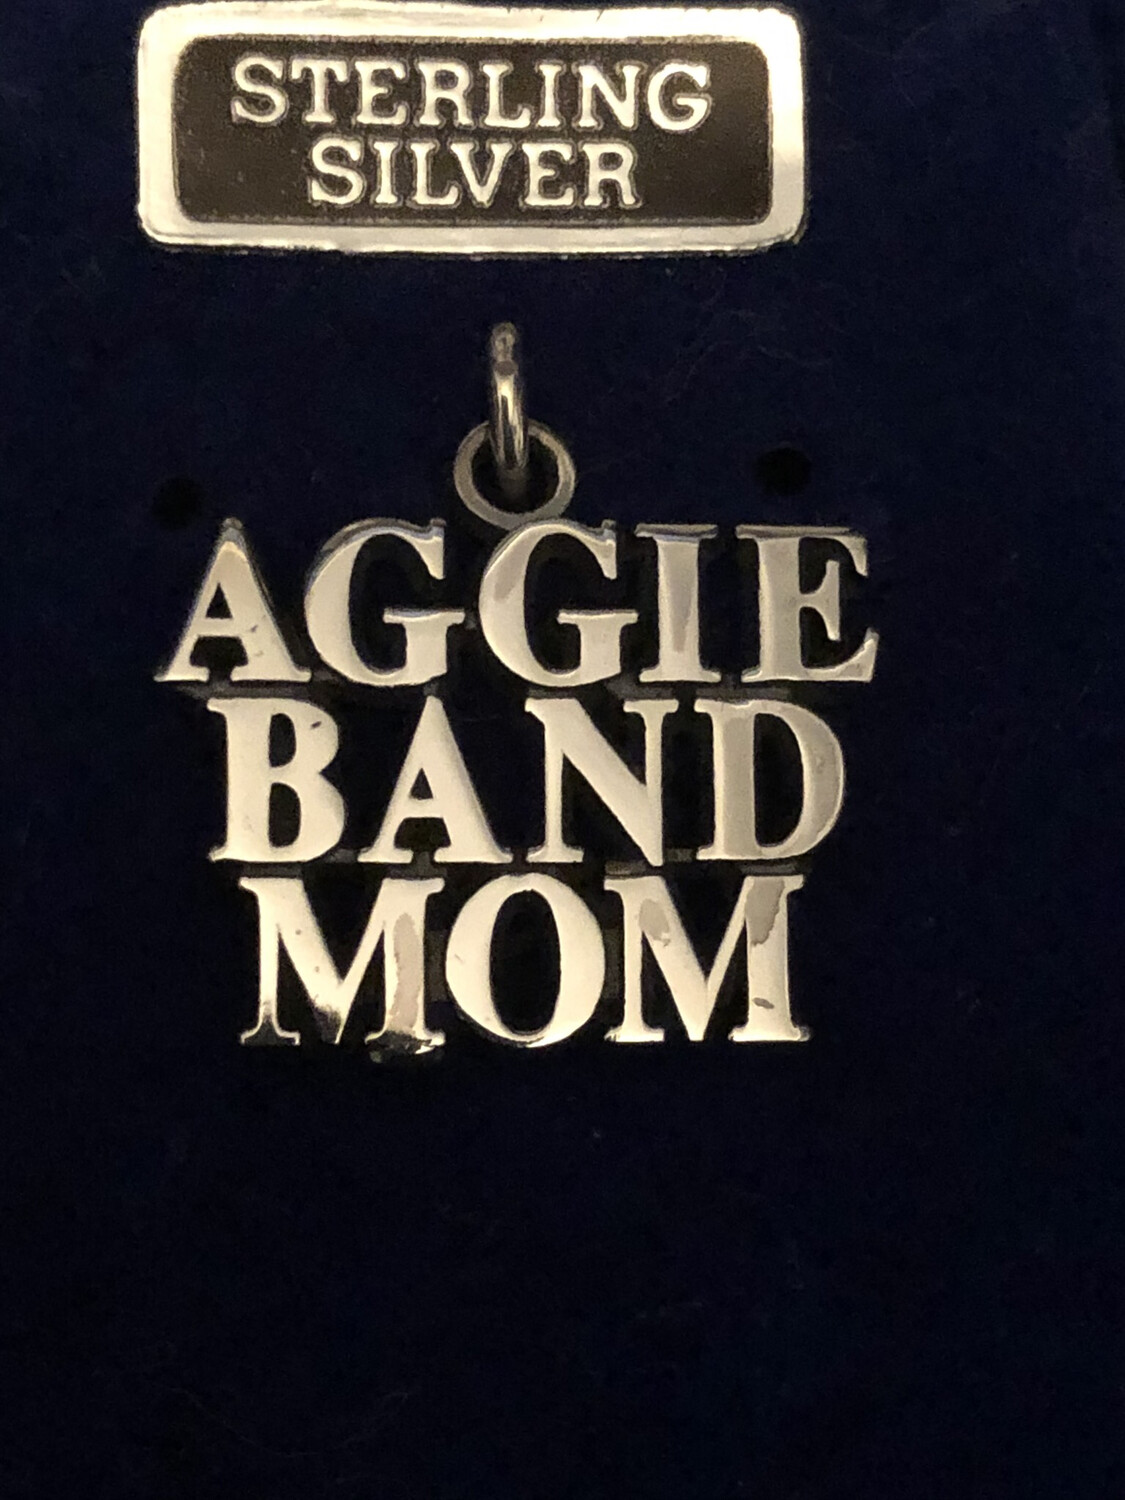 Aggie Band Mom